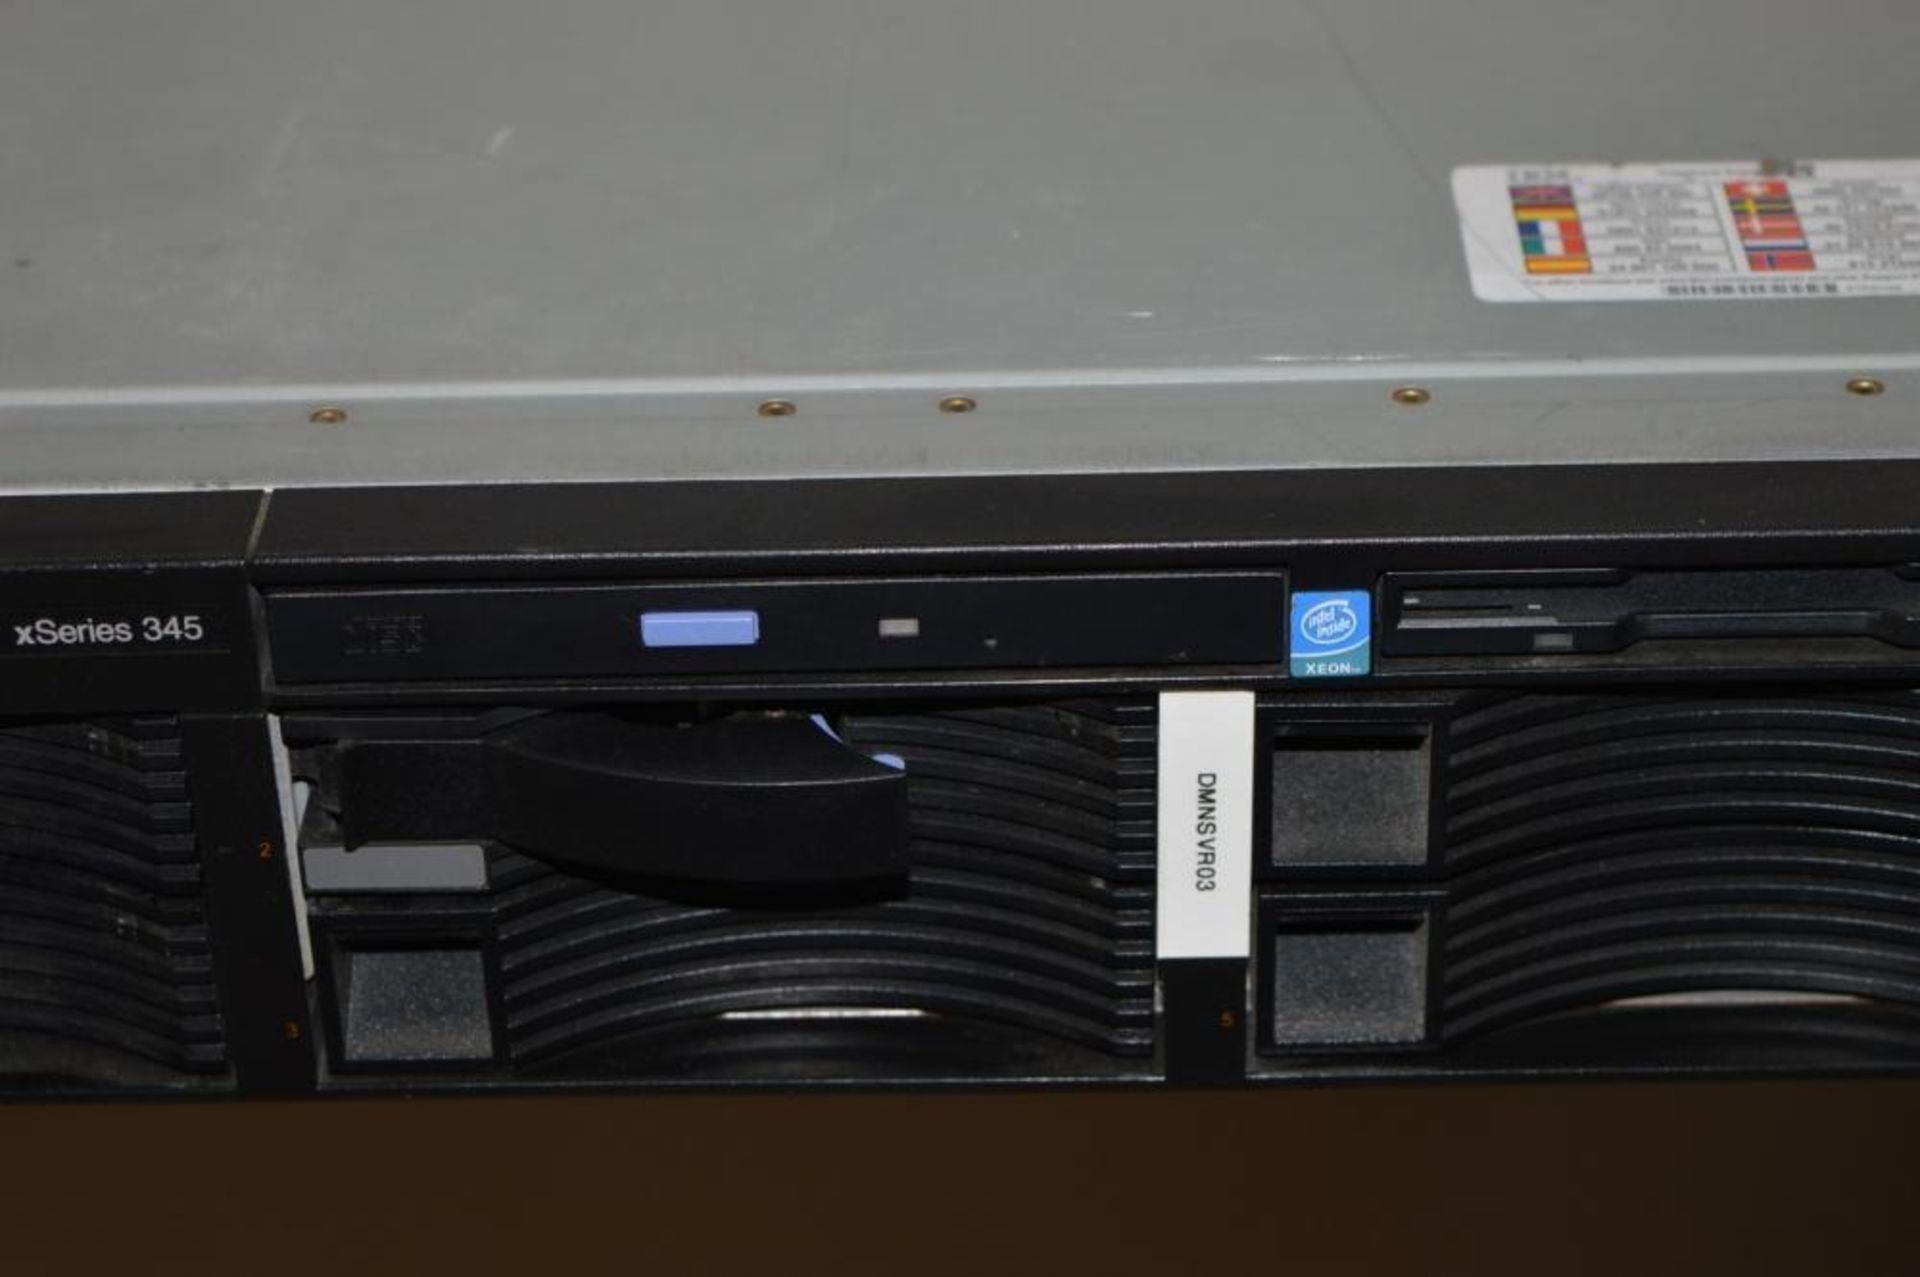 1 x IBM xSeries 345 Server - Includes Dual Xeon Processors, 1gb Ram, Raid Card - Hard Disk Drives - Image 2 of 6